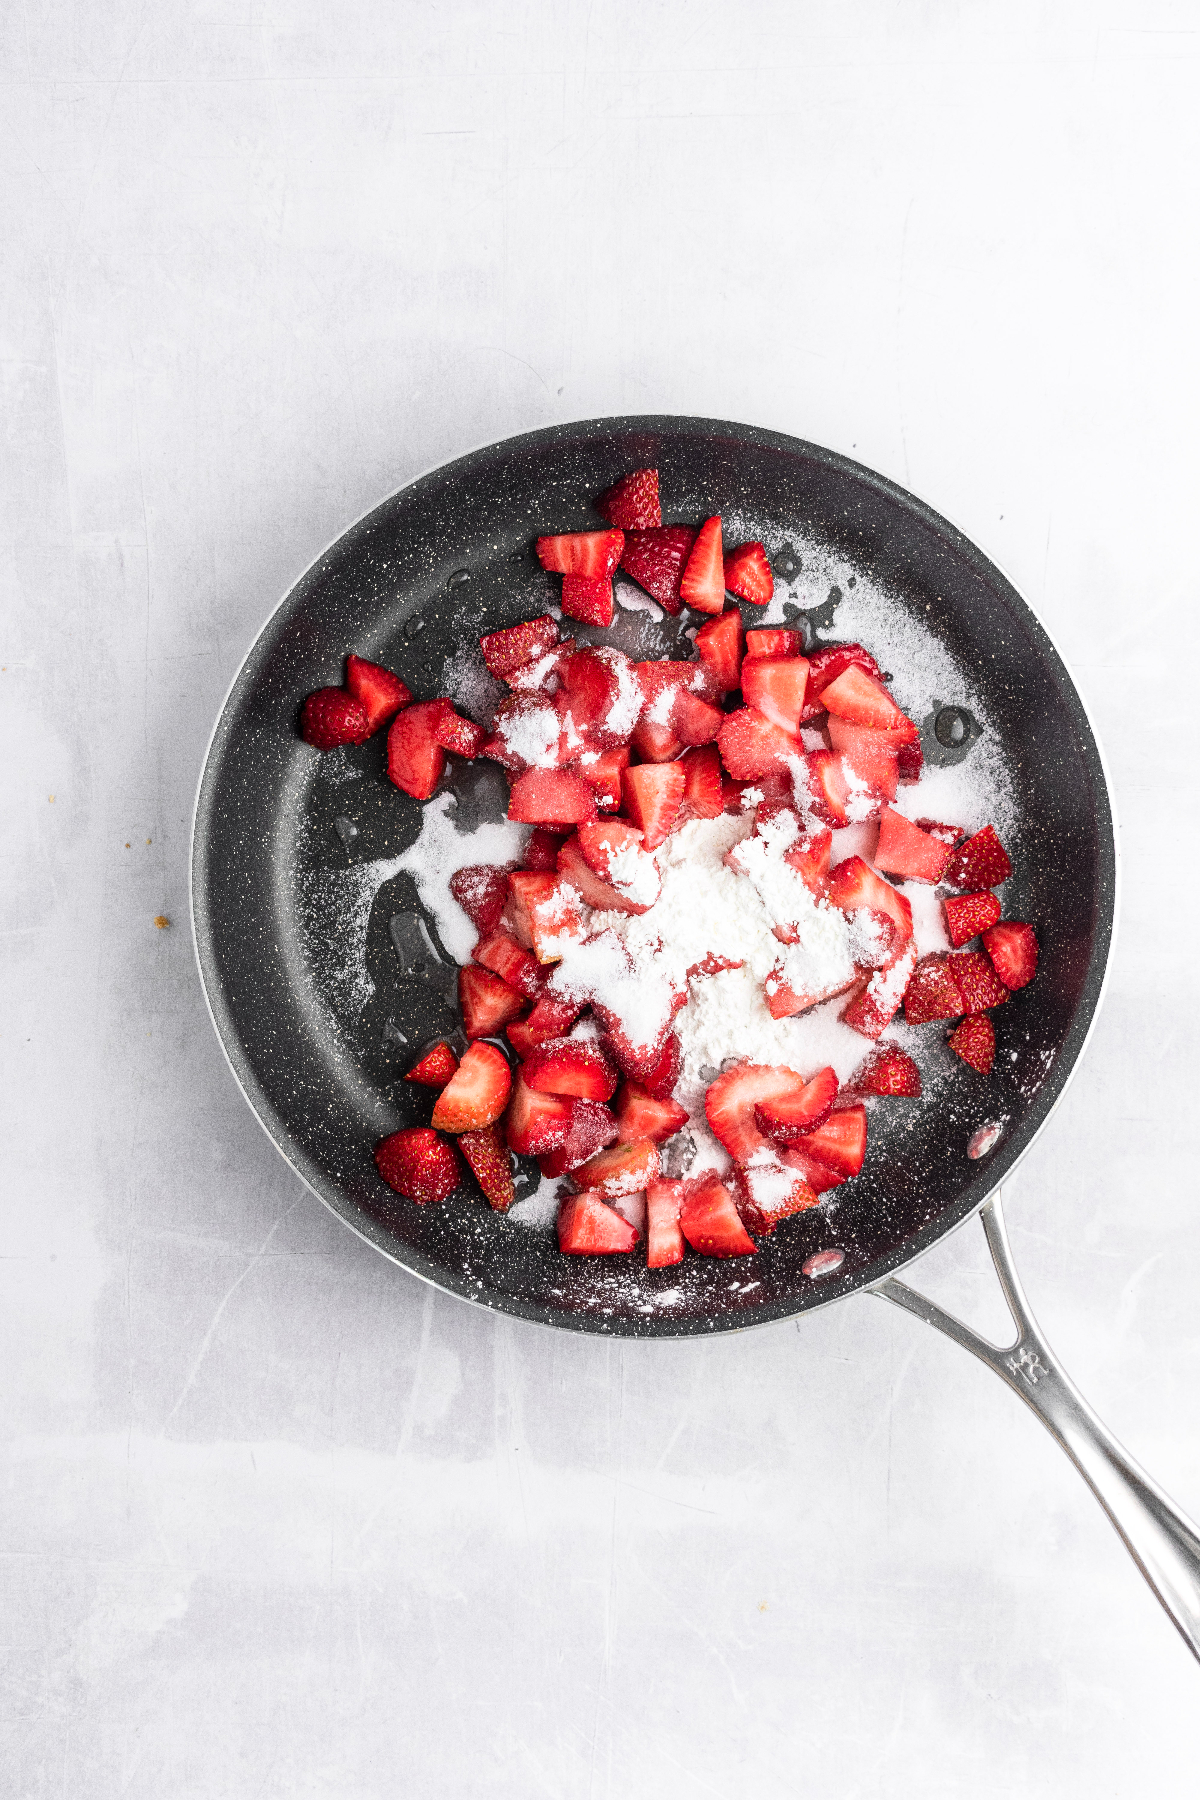 Diced strawberries and sugar in a saucepan.